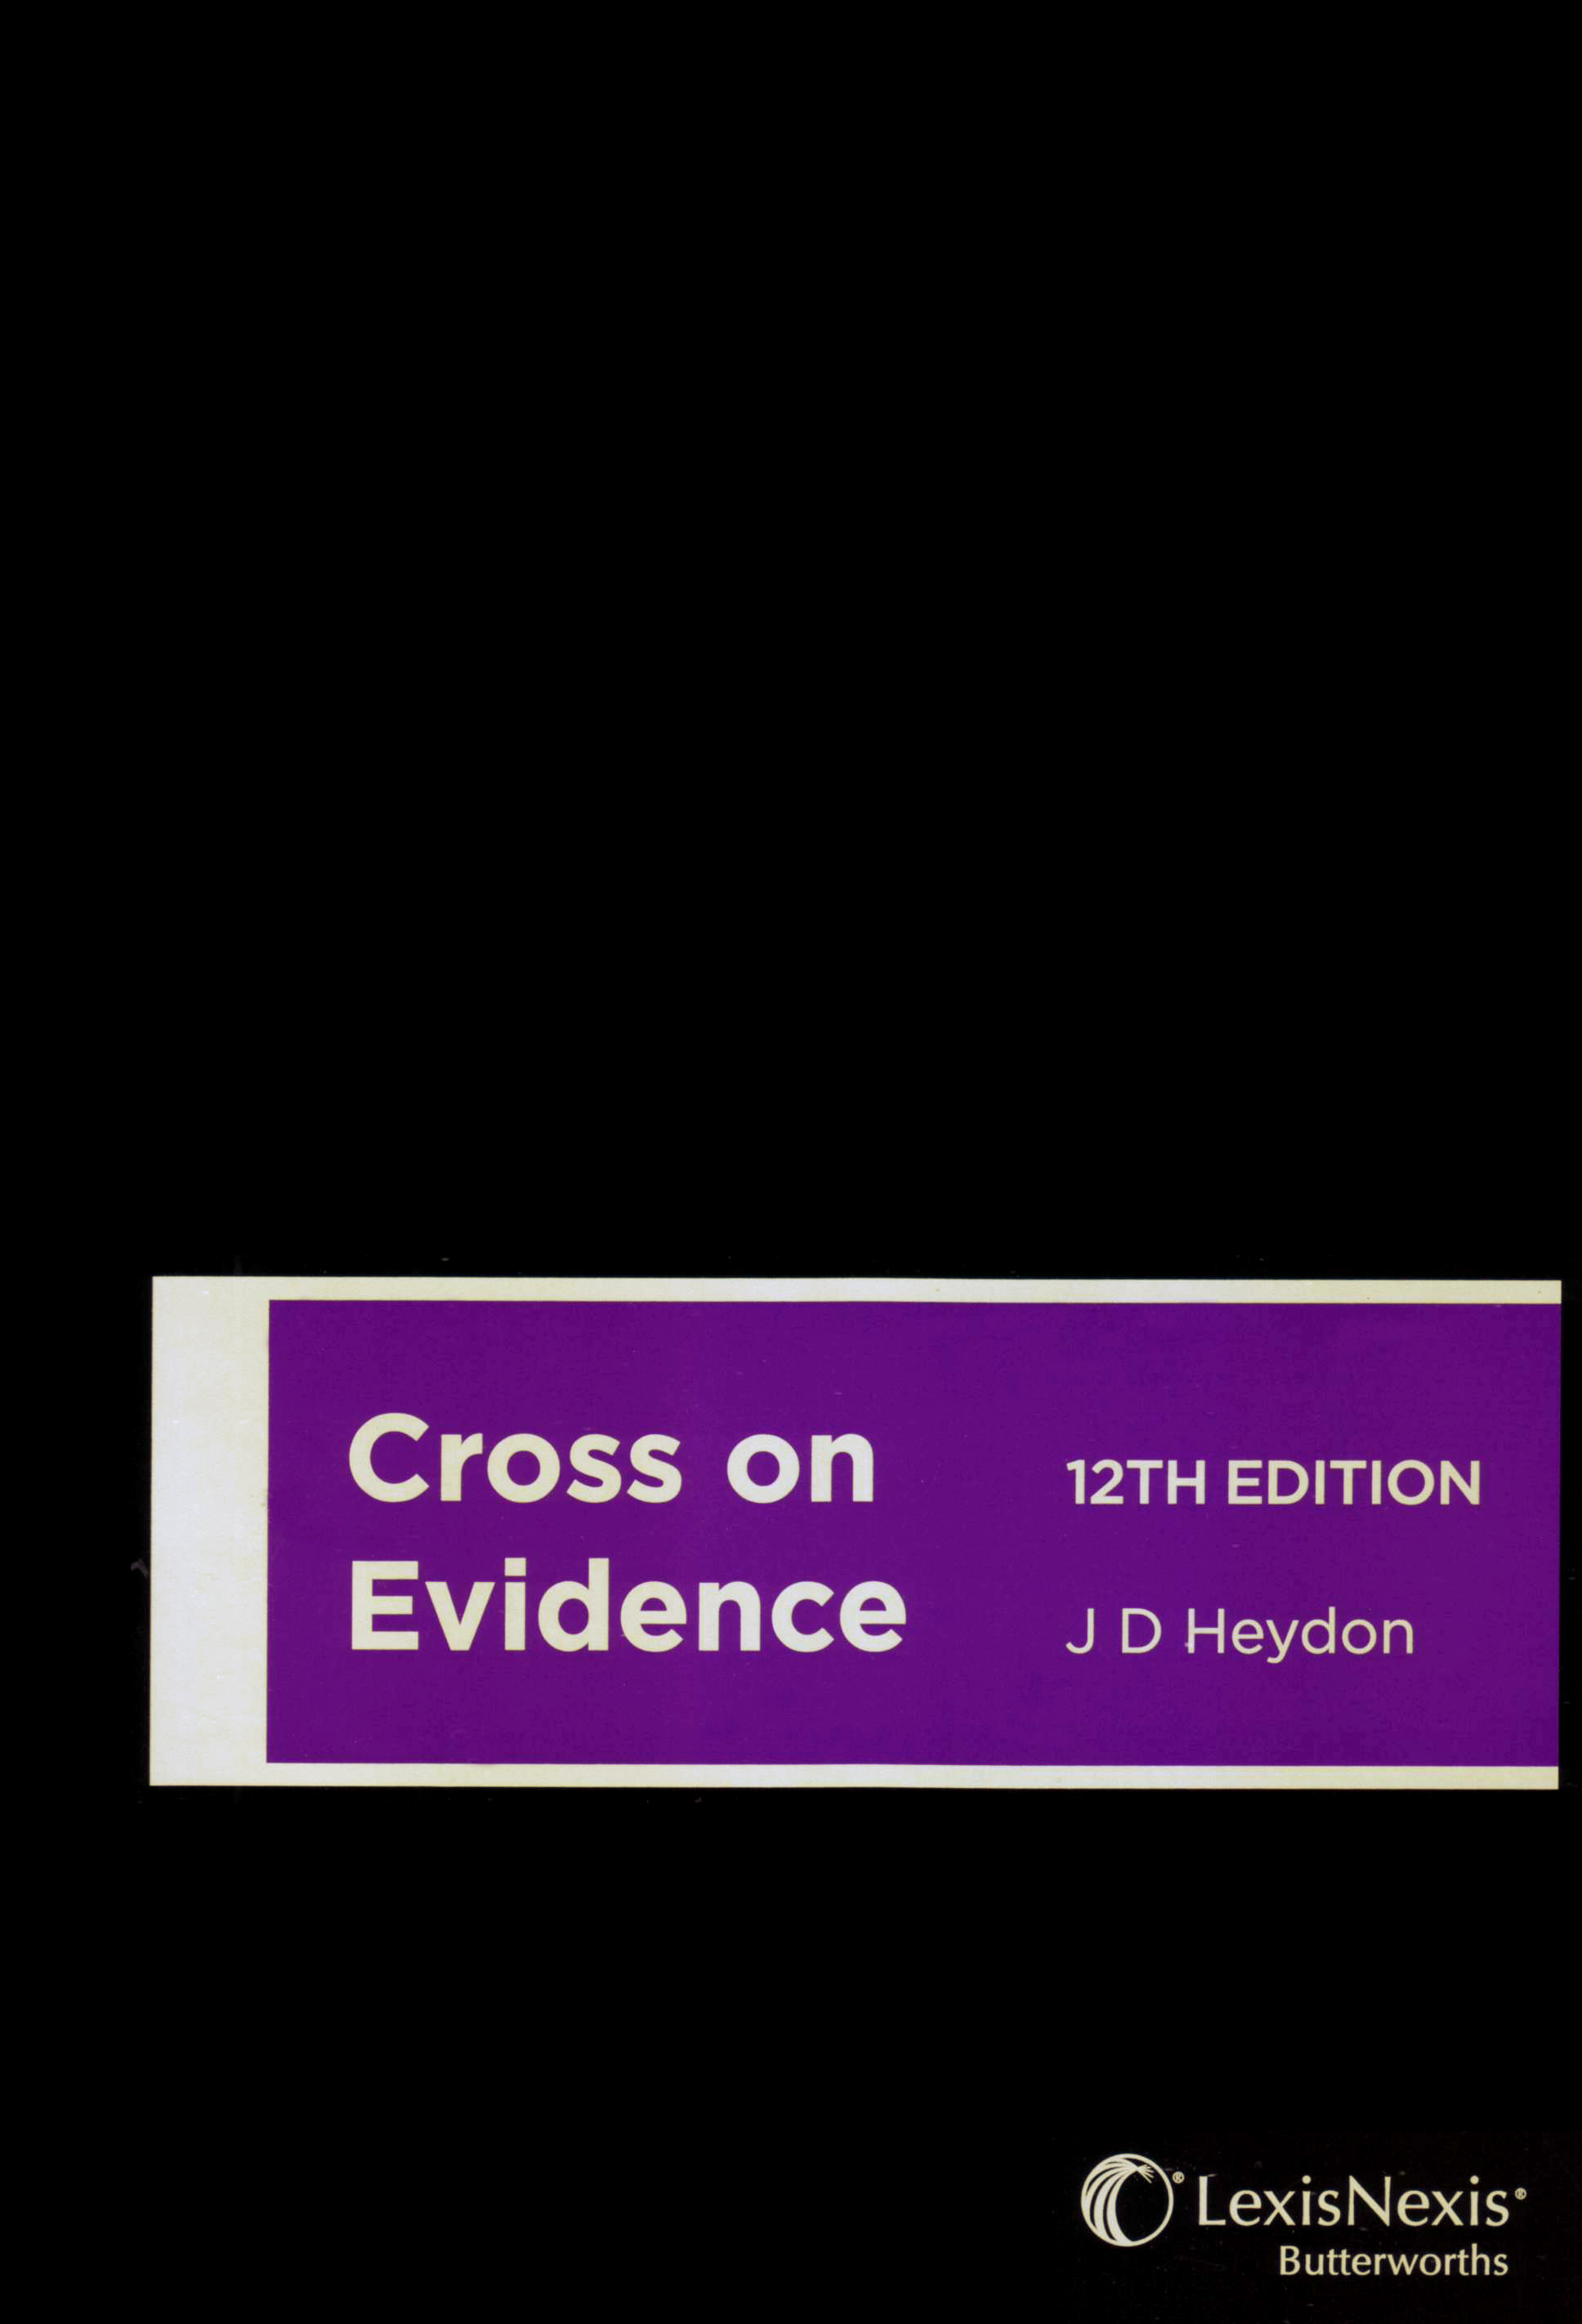 Cross on Evidence e12